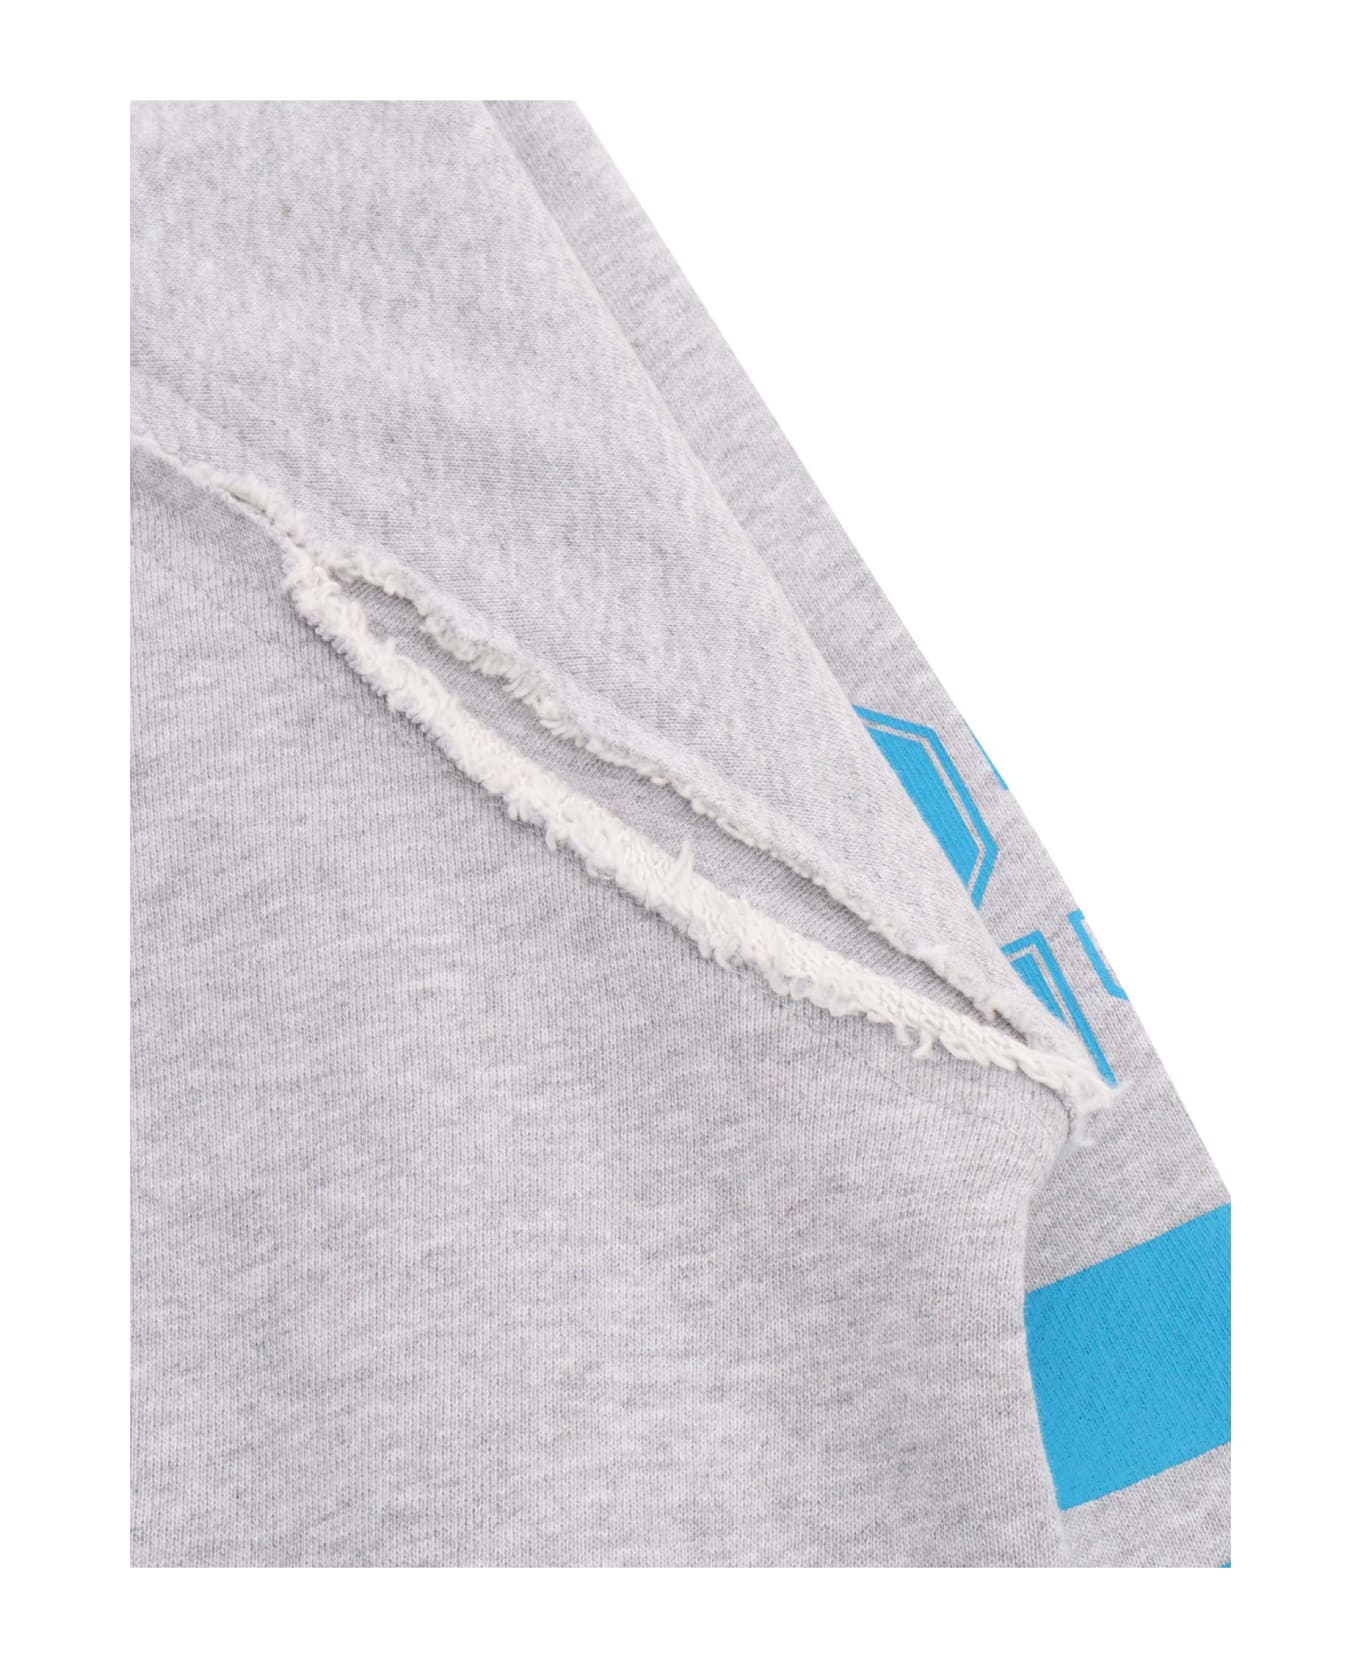 Off-White Gray And Light Blue Sweatshirt - GREY